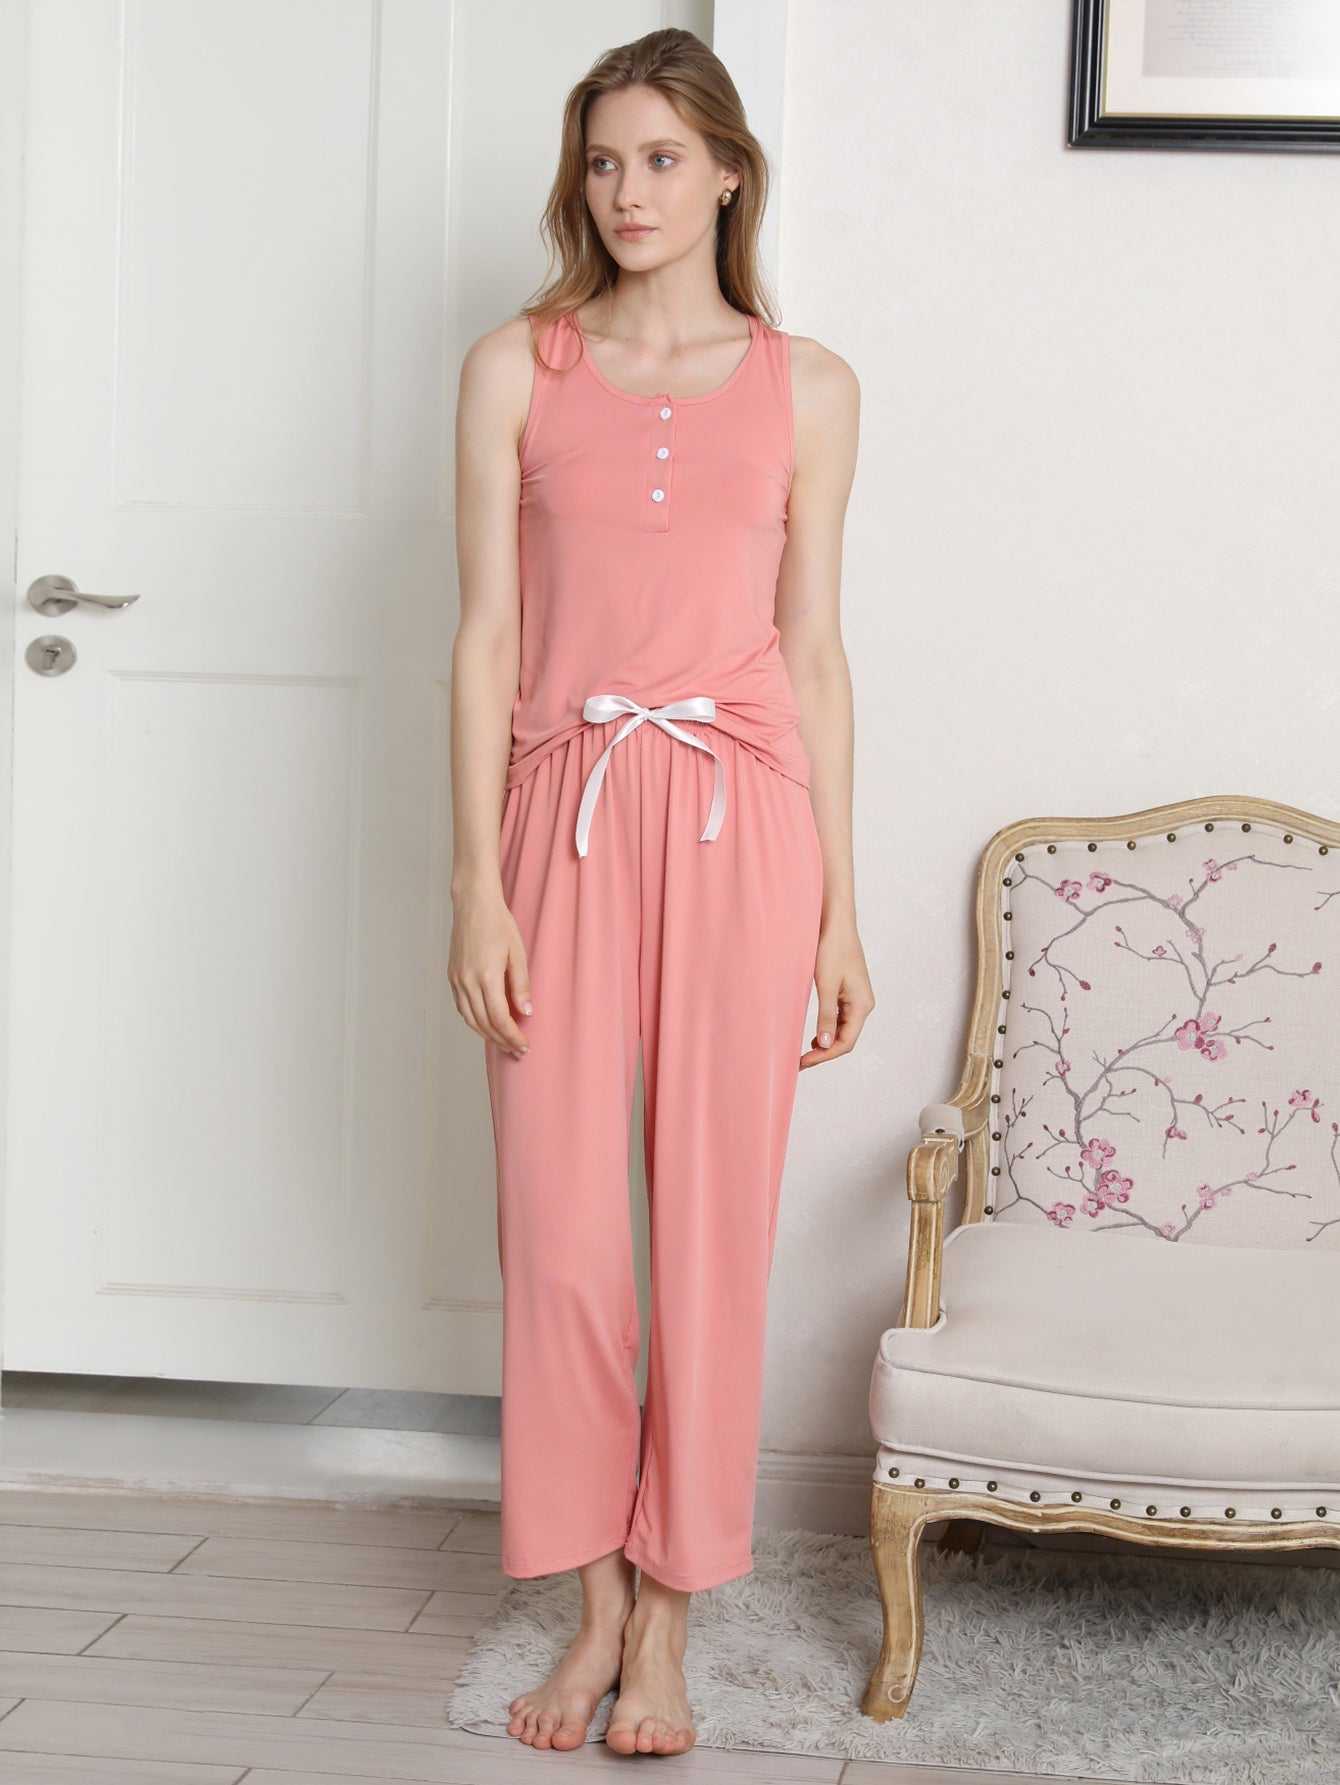 Women's Pajama Sport Set Sleeveless Sleepwear Tank Top with Pants Soft Pj Set Sleepwear Sai Feel